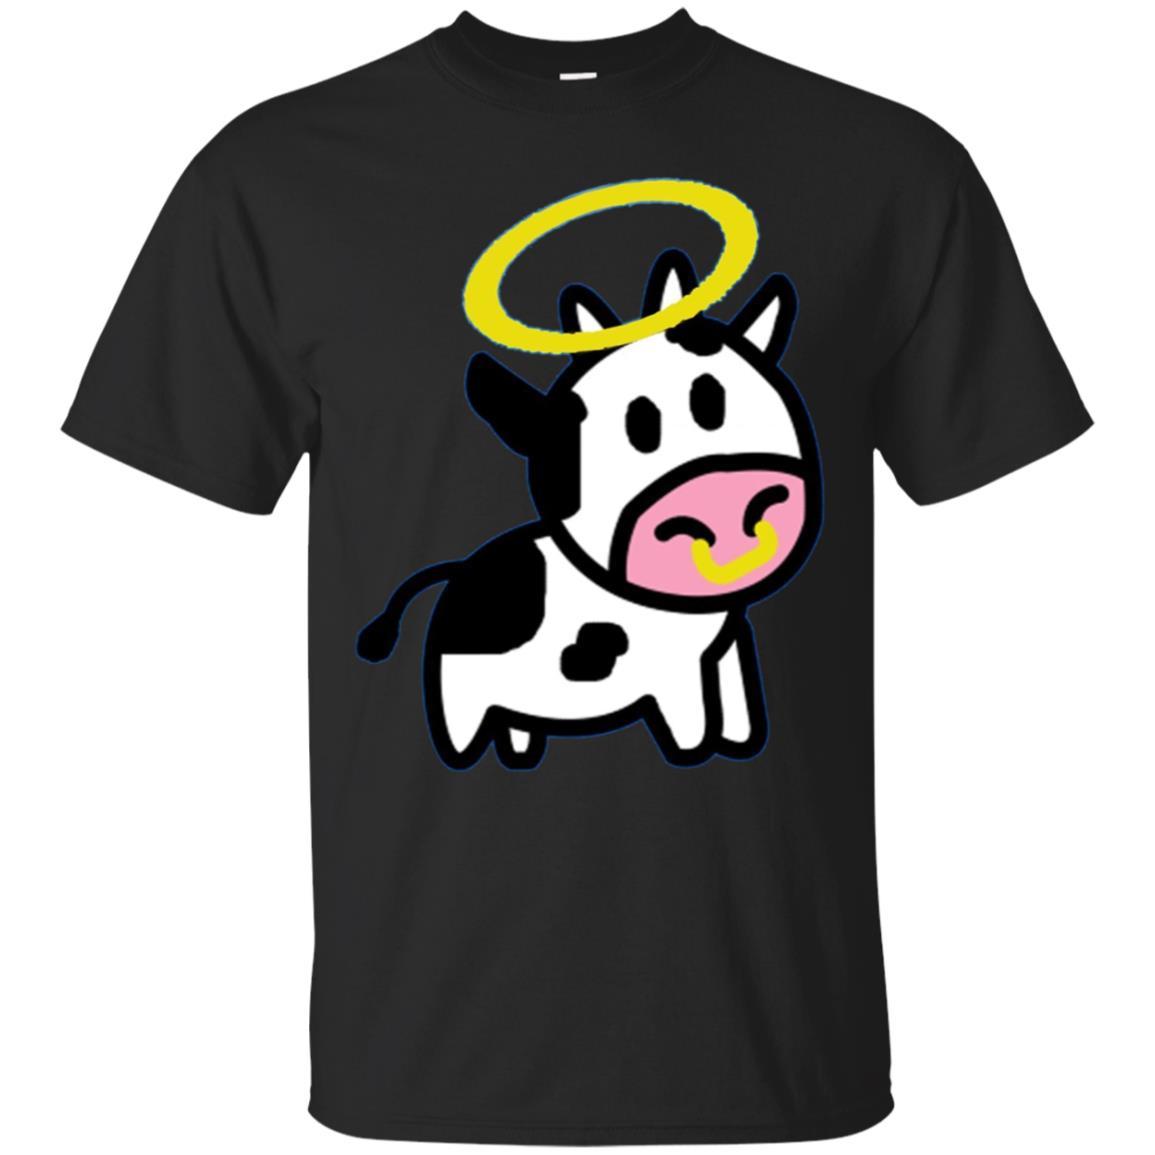 Holy Halo Cow Shirt - Cute Cow T Shirt